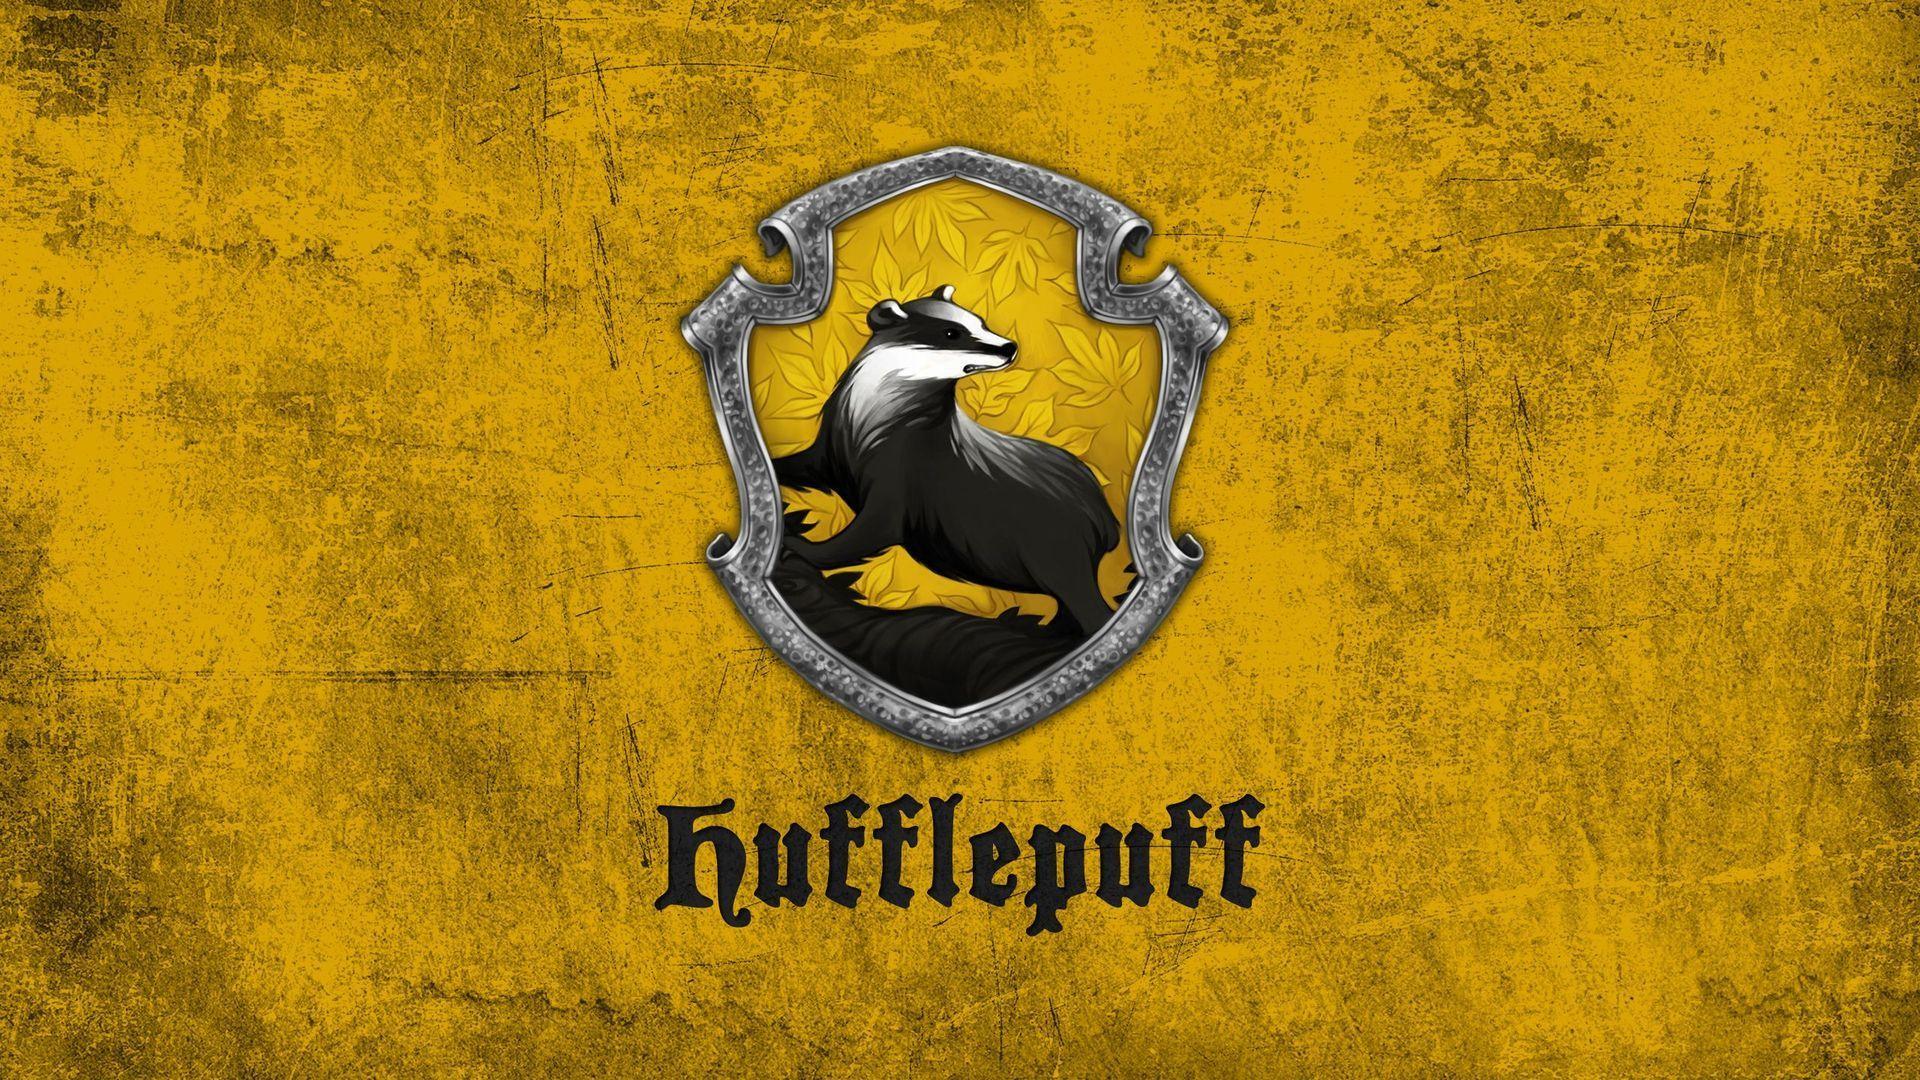 Hufflepuff Wallpapers - Top Free